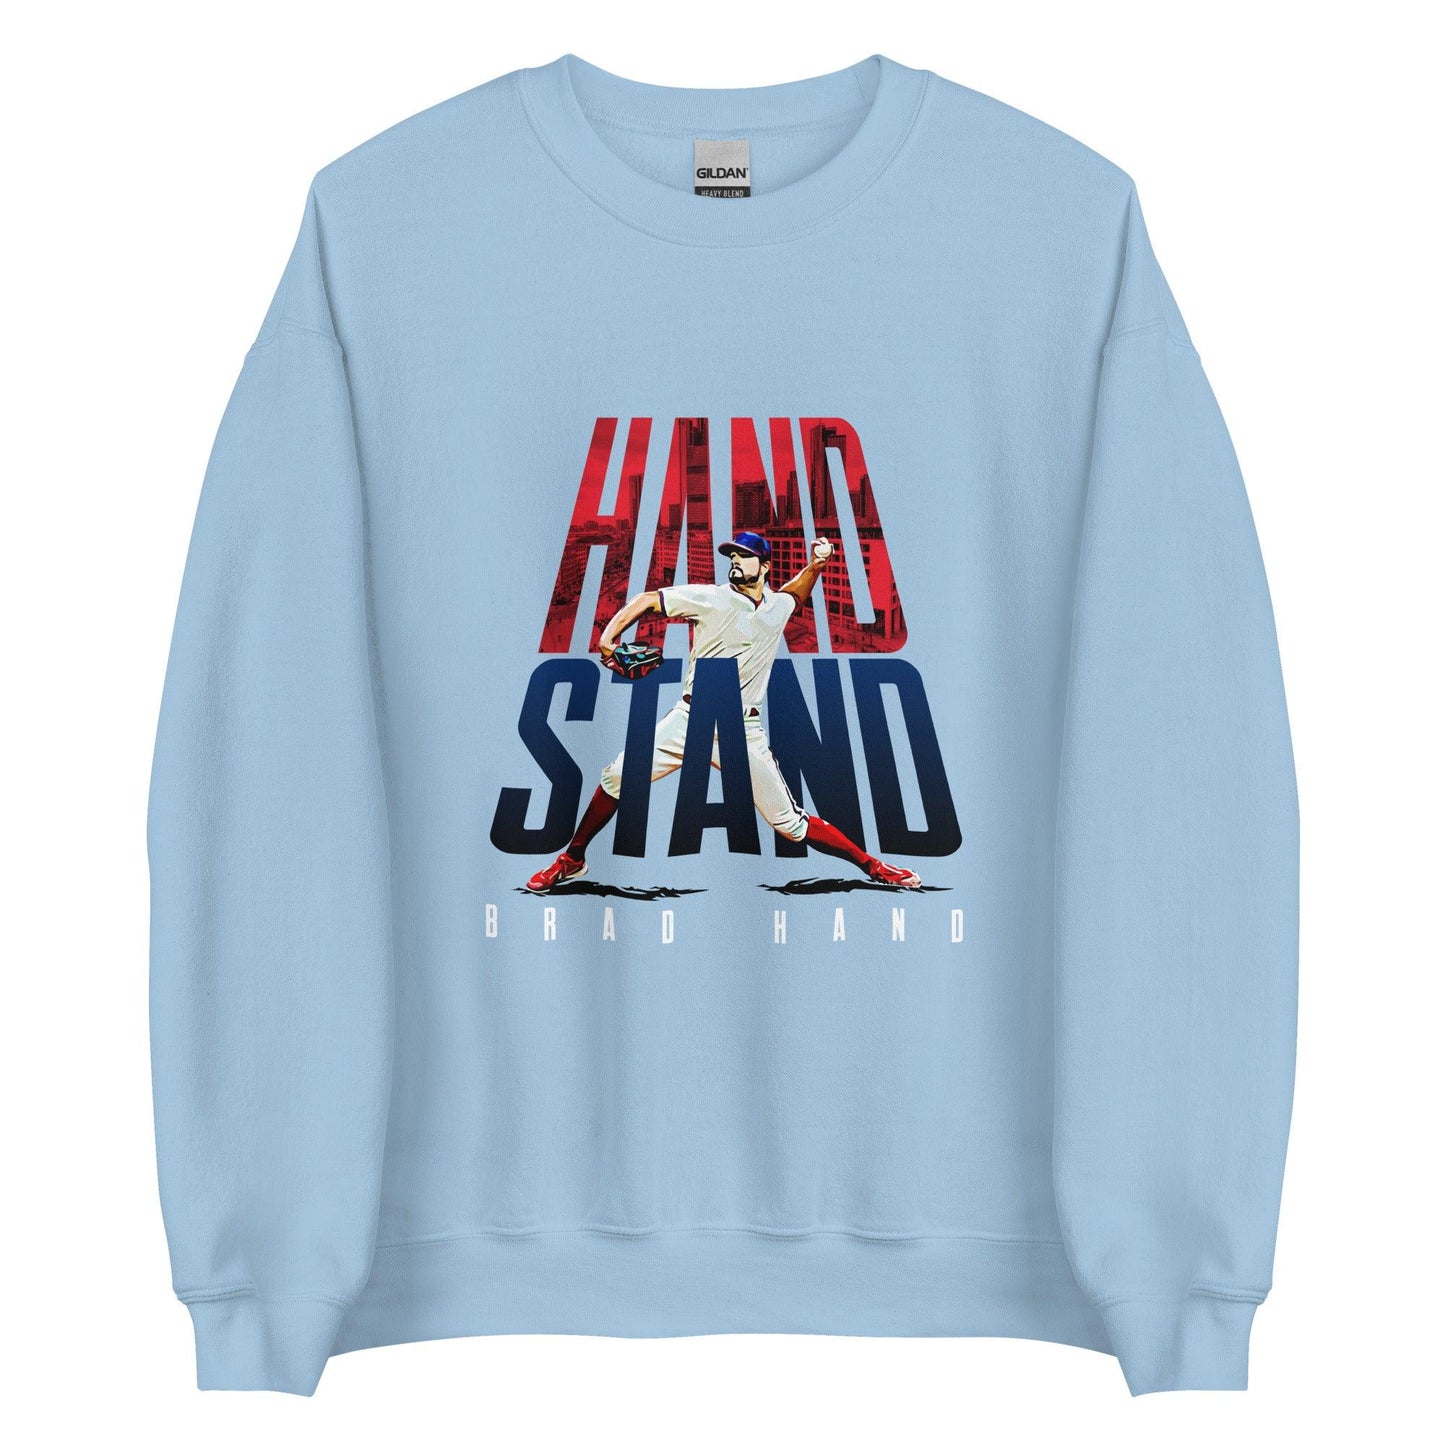 Brad Hand "Hand Stand" Sweatshirt - Fan Arch